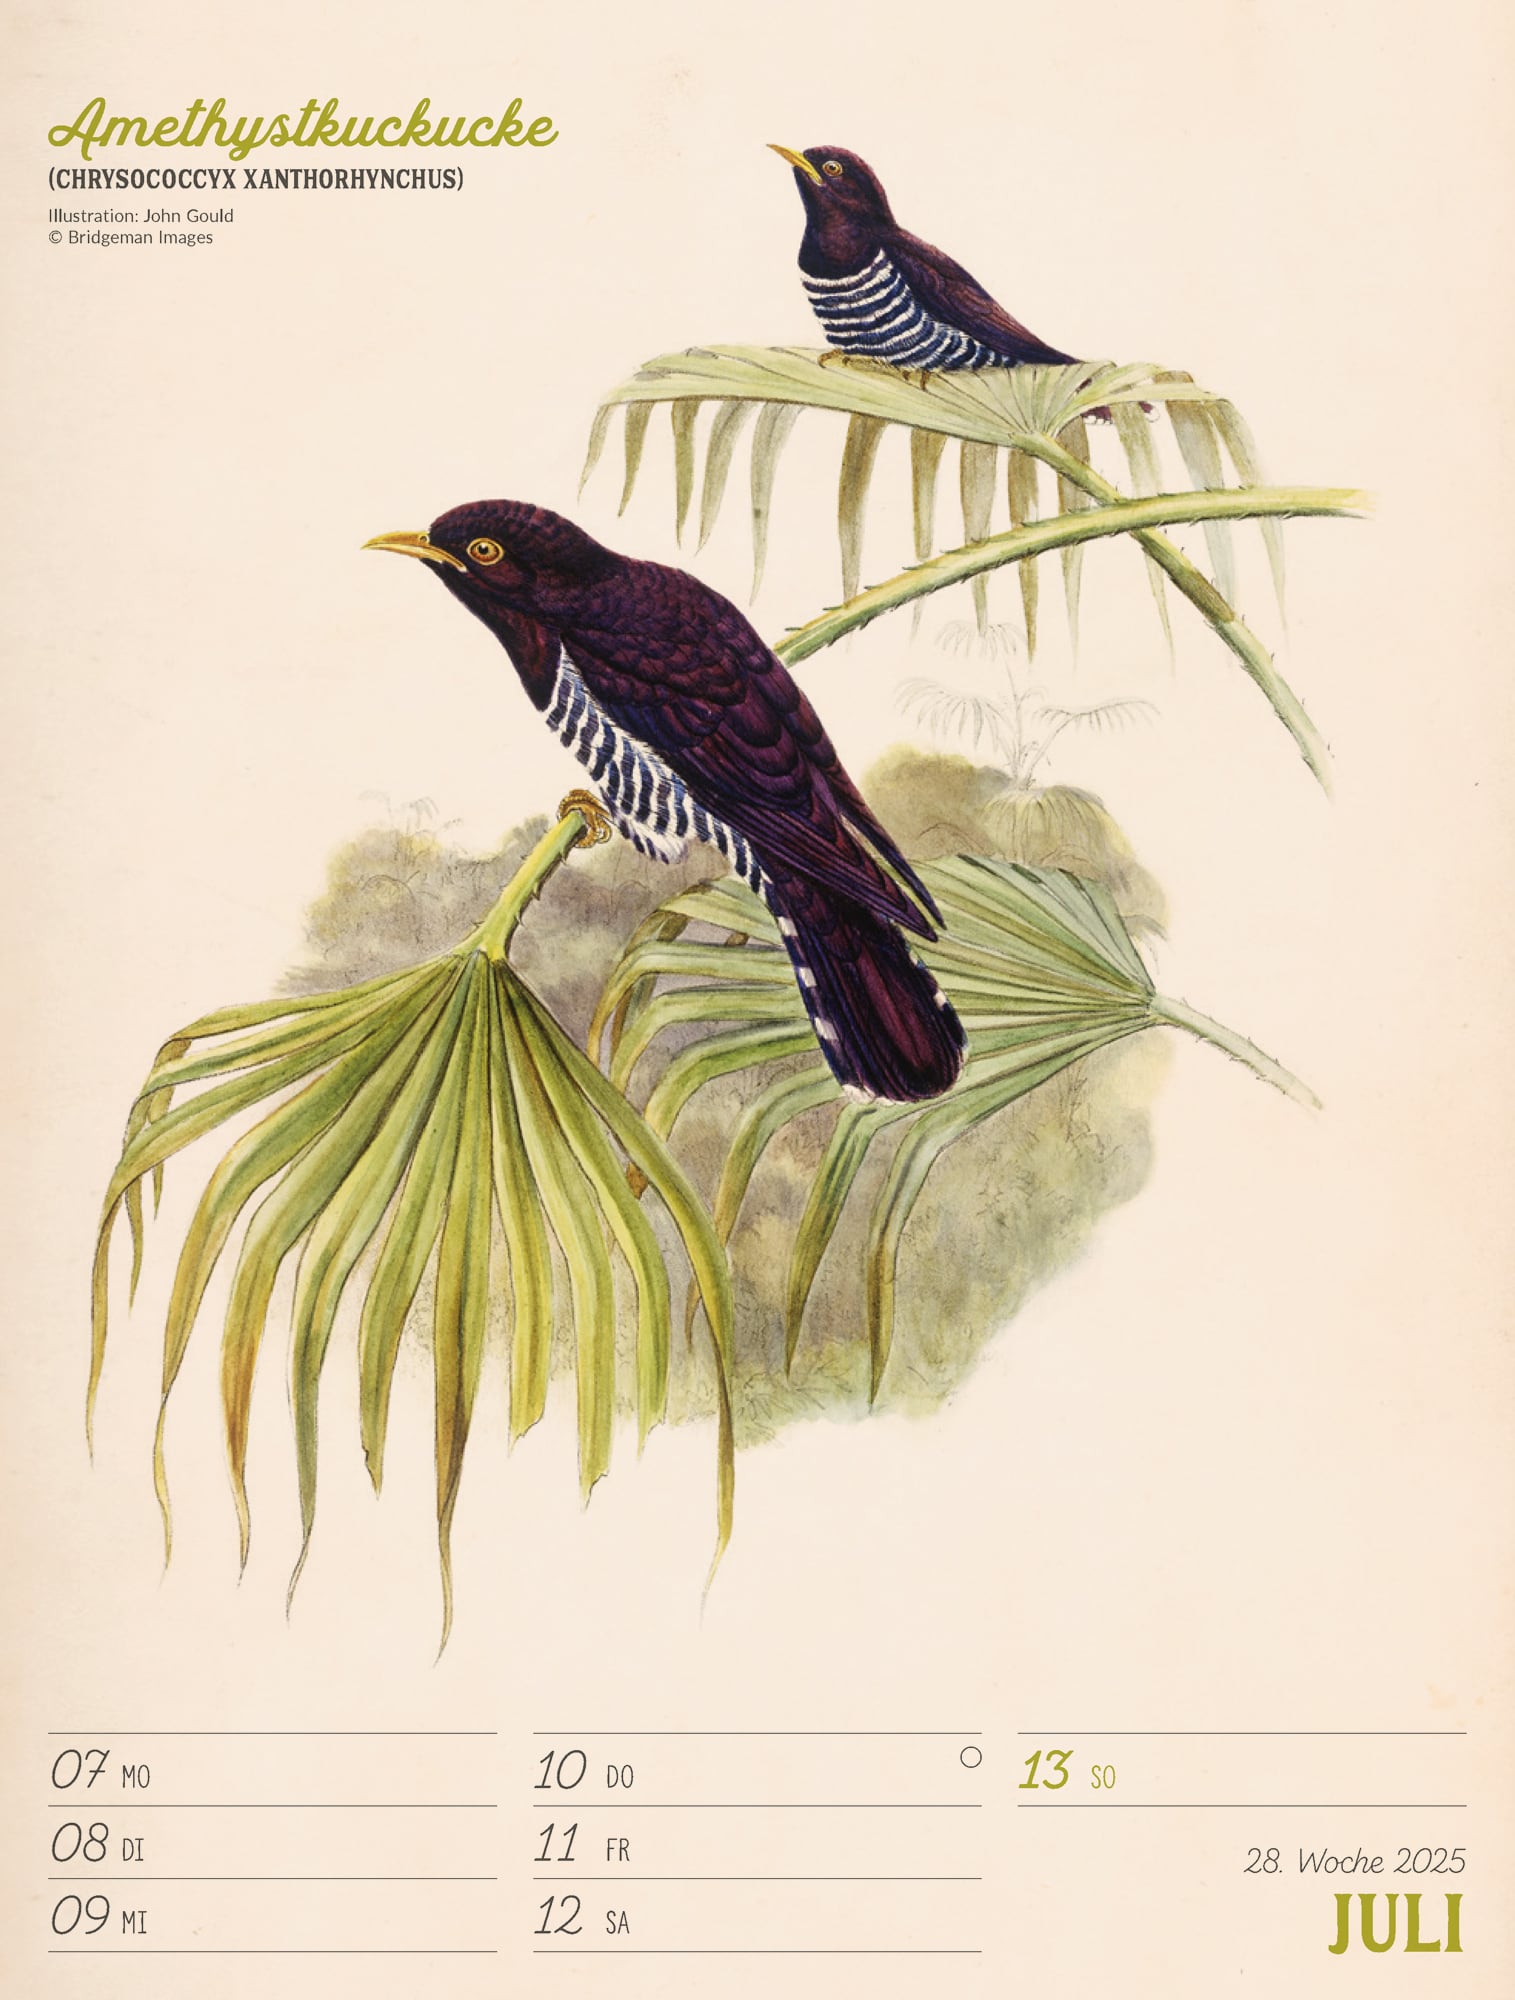 Ackermann Calendar The wonderful World of Birds 2025 - Weekly Planner - Inside View 31